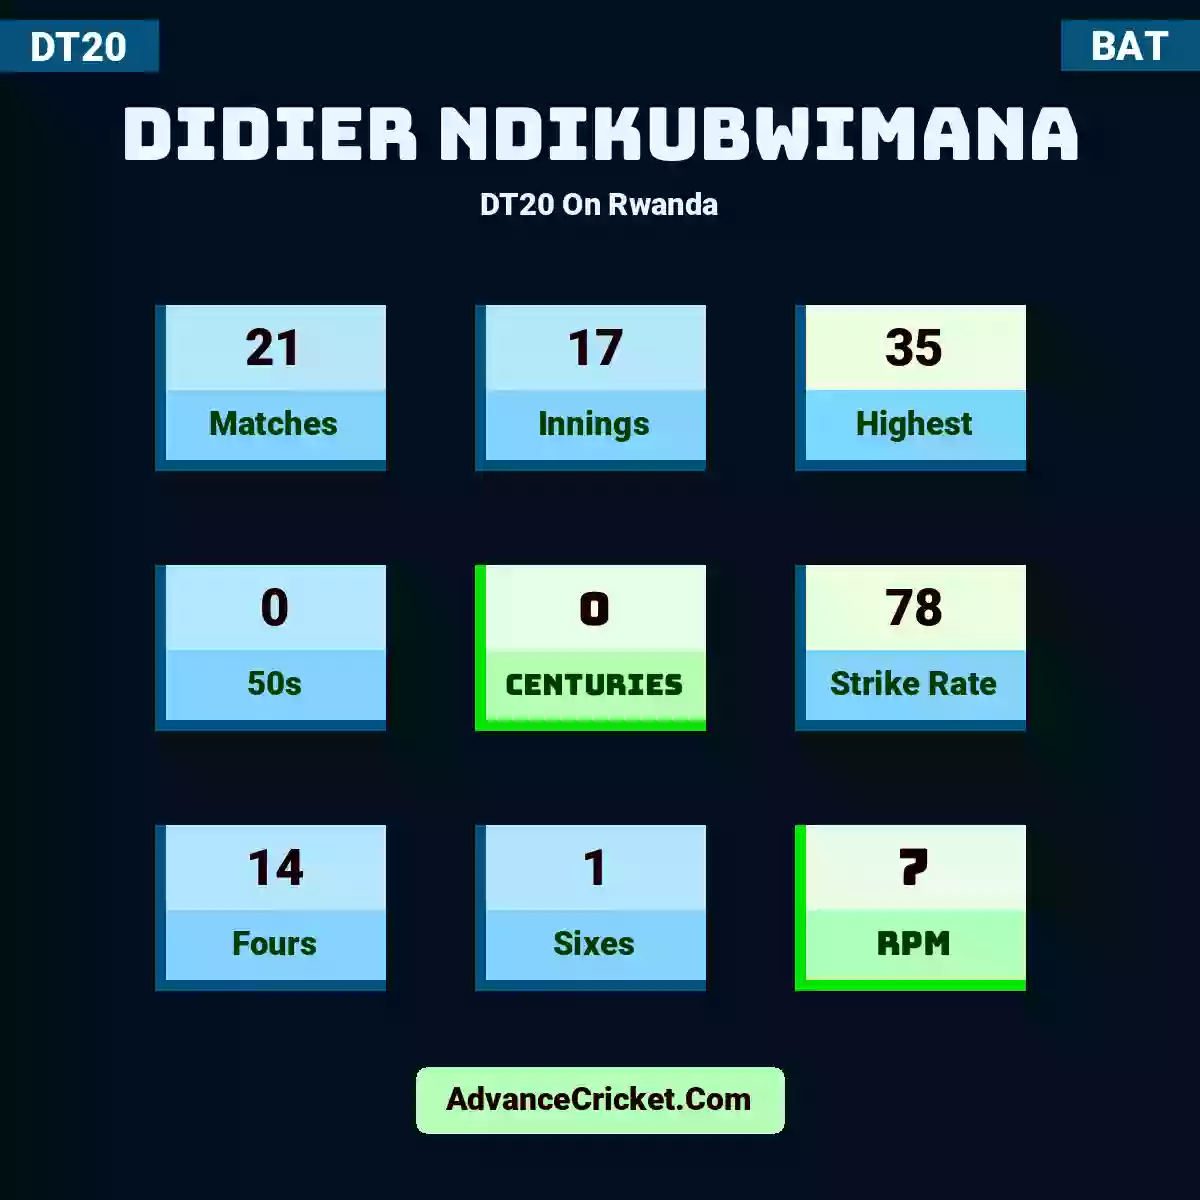 Didier Ndikubwimana DT20  On Rwanda, Didier Ndikubwimana played 21 matches, scored 35 runs as highest, 0 half-centuries, and 0 centuries, with a strike rate of 78. D.Ndikubwimana hit 14 fours and 1 sixes, with an RPM of 7.